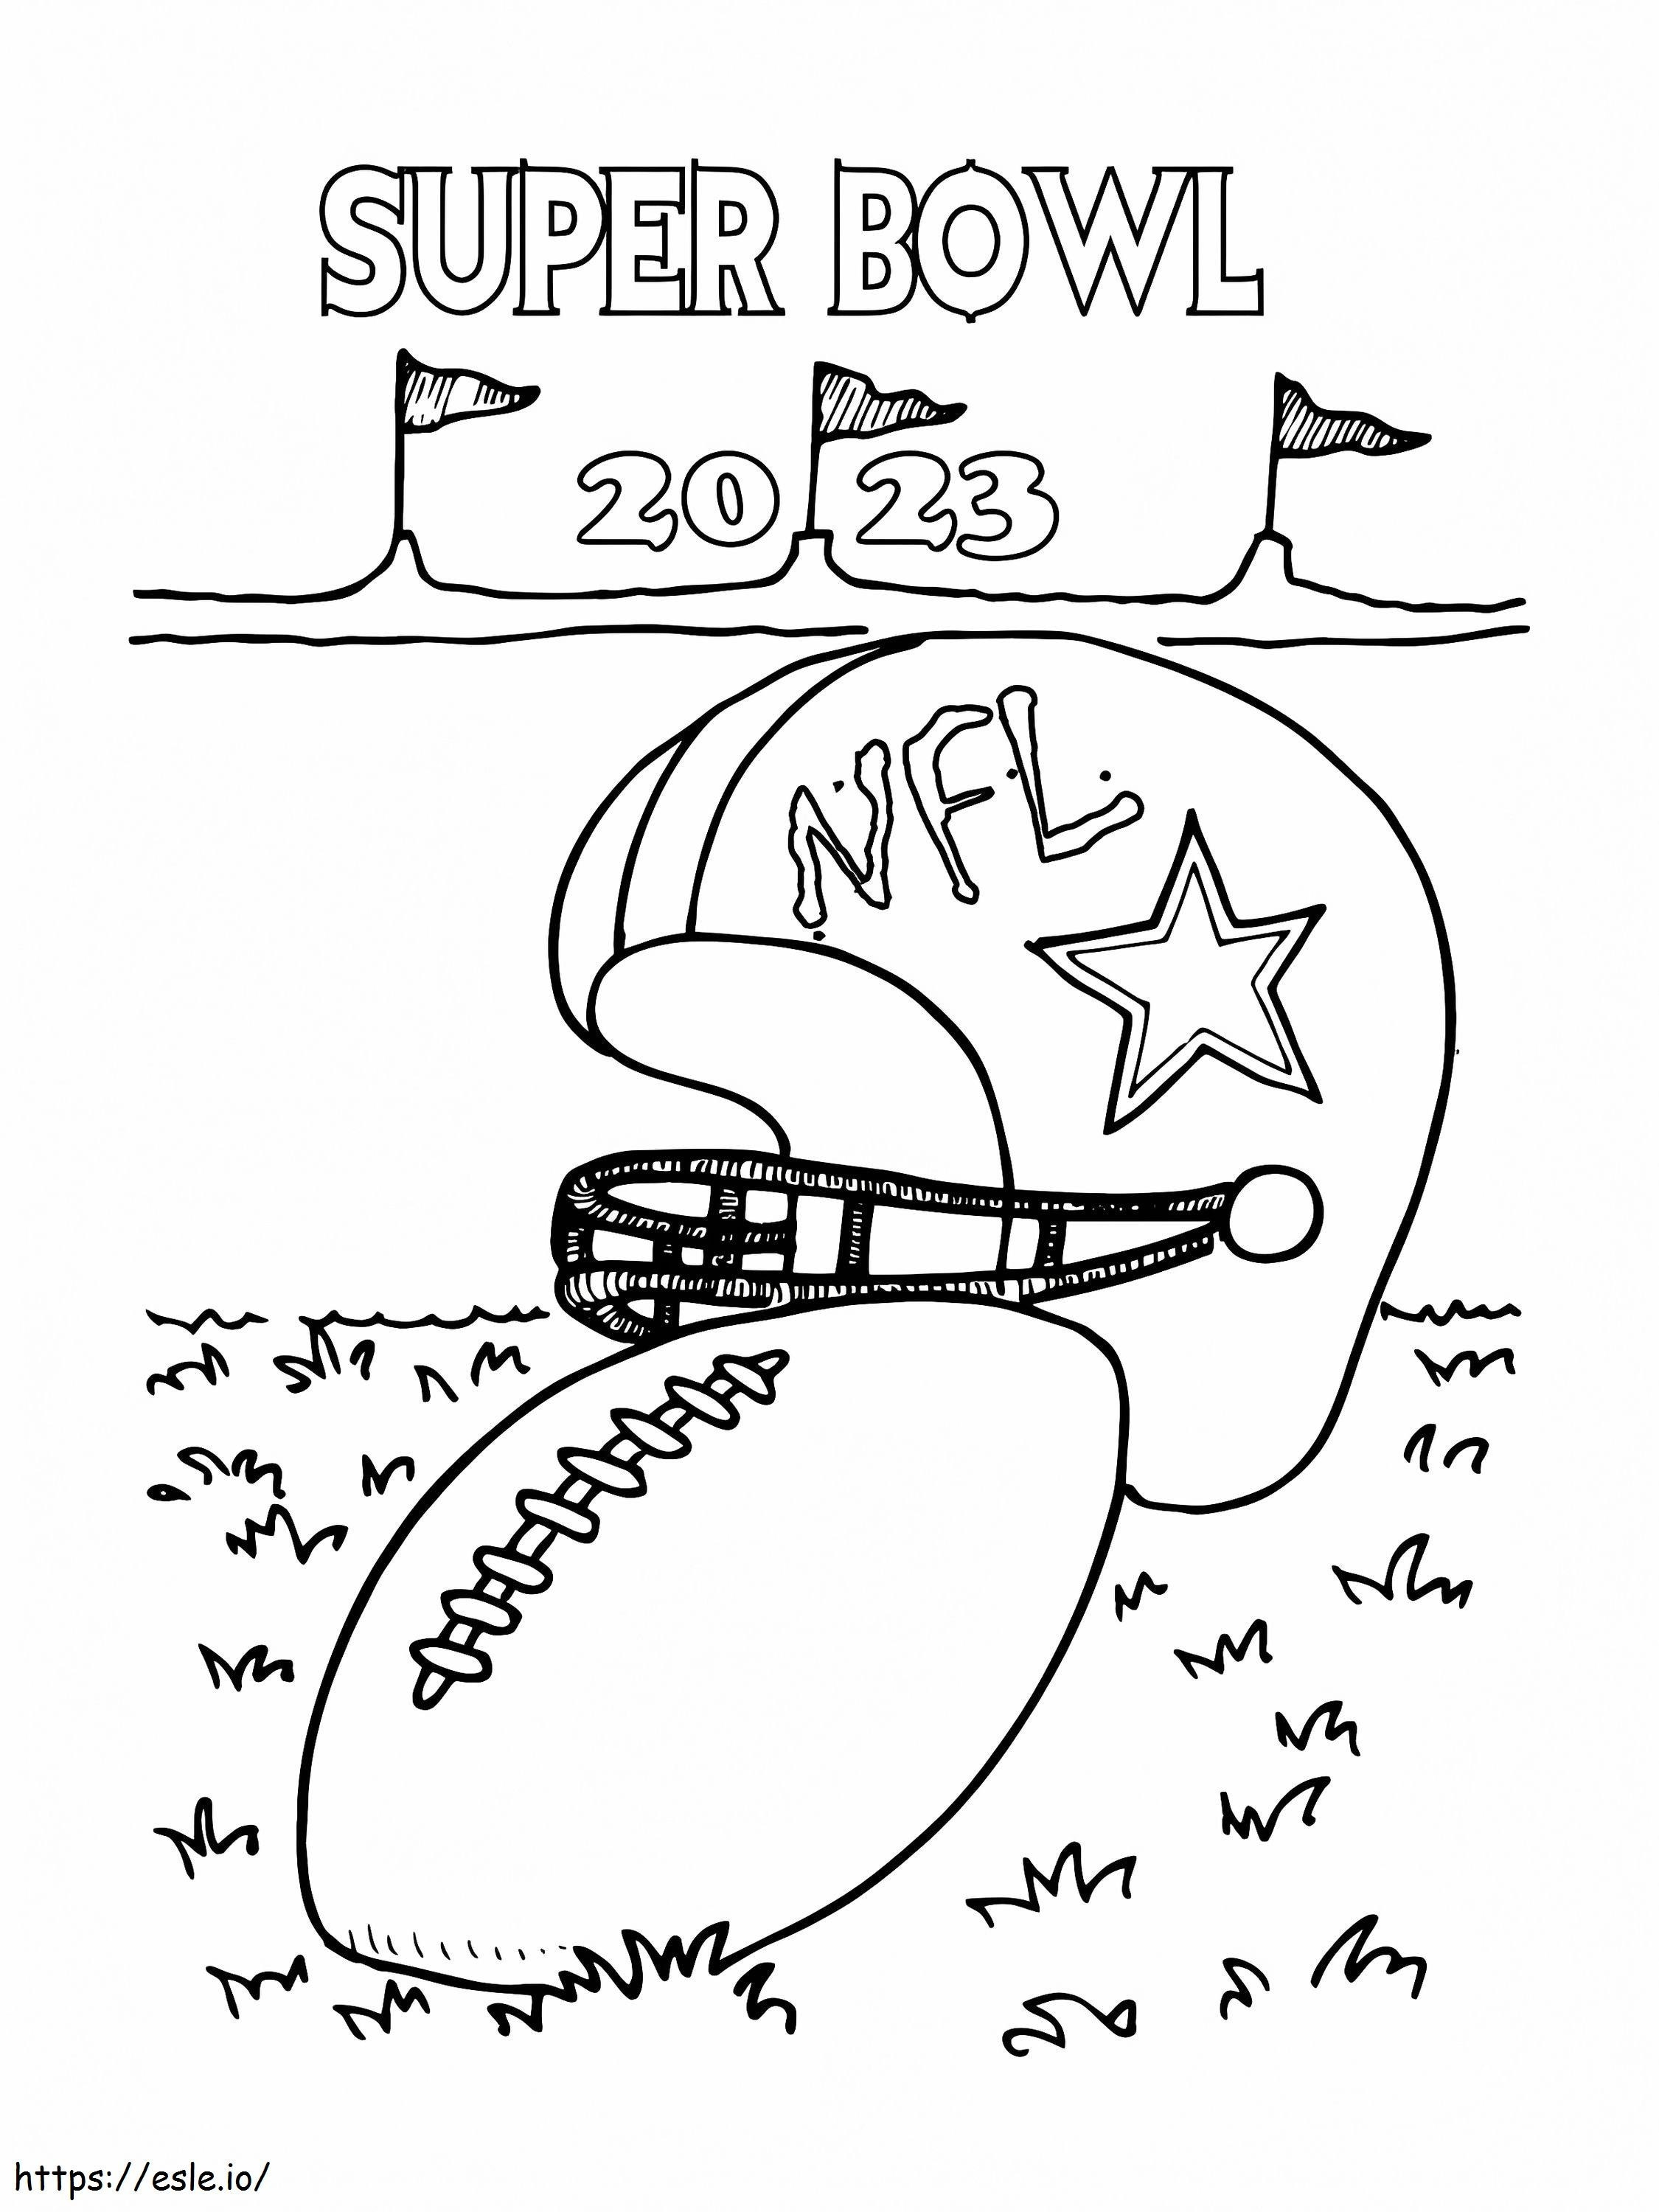 Capacete e bola do Super Bowl para colorir